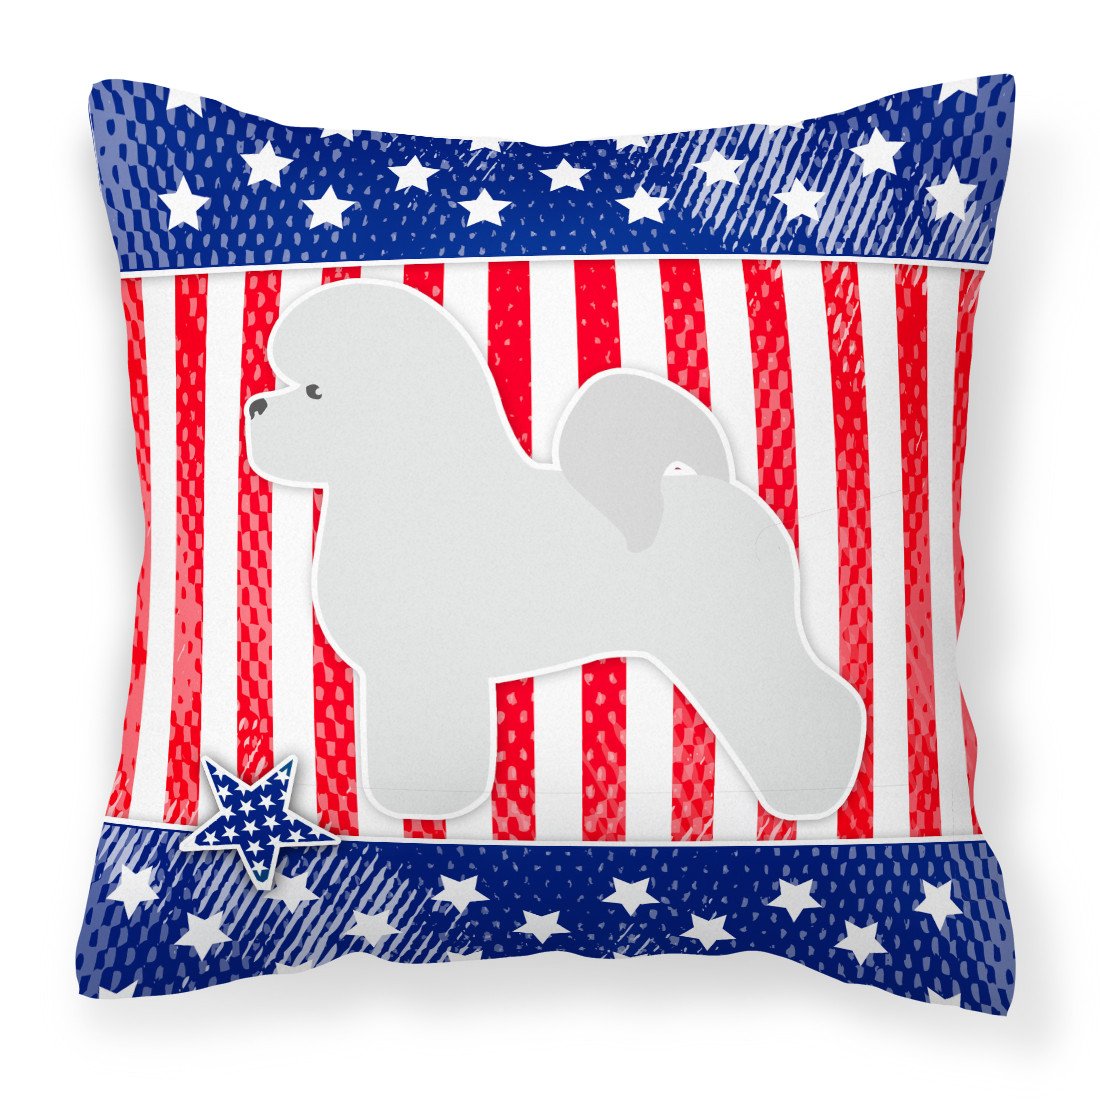 USA Patriotic Bichon Frise Fabric Decorative Pillow BB3345PW1818 by Caroline's Treasures